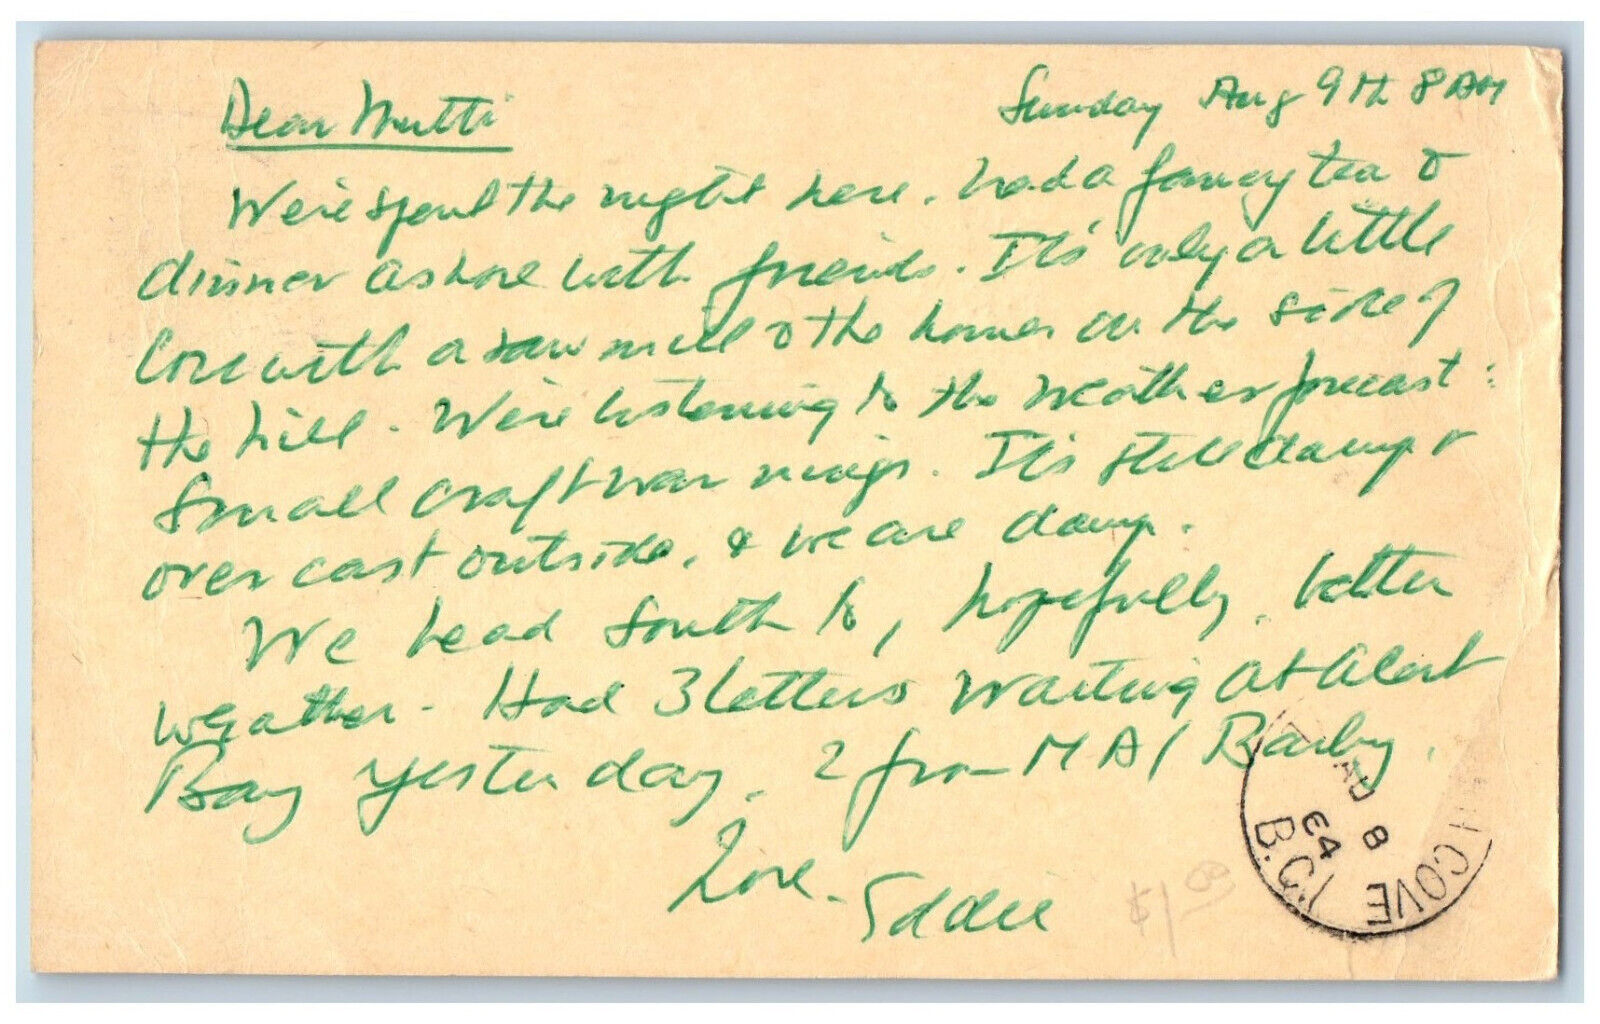 Telegraph Cove British Columbia Canada Postal Card WM Drechsset Letter 1964